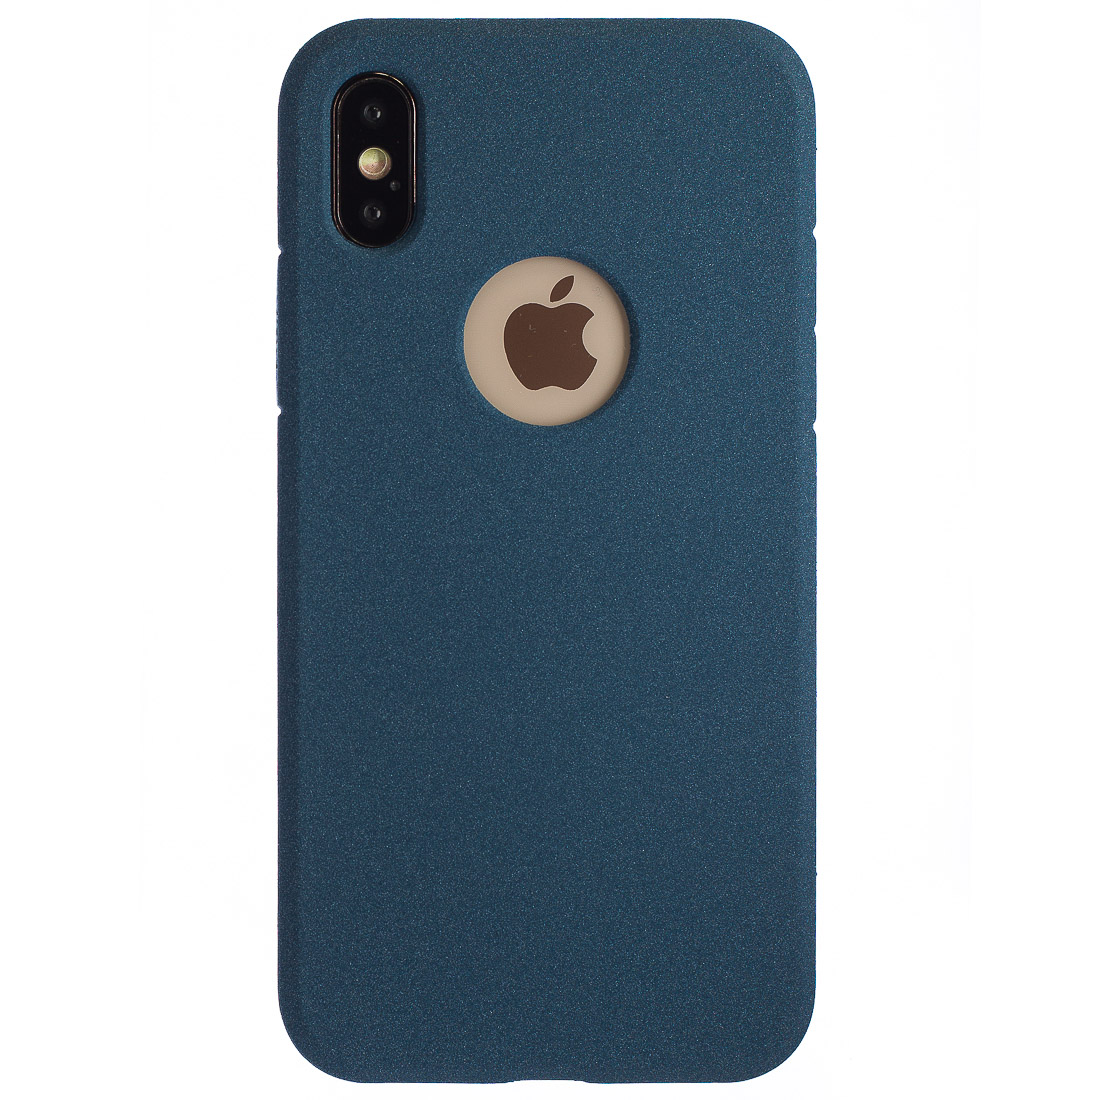 Husa Silicon iPhone X/XS, Albastru Sand thumb